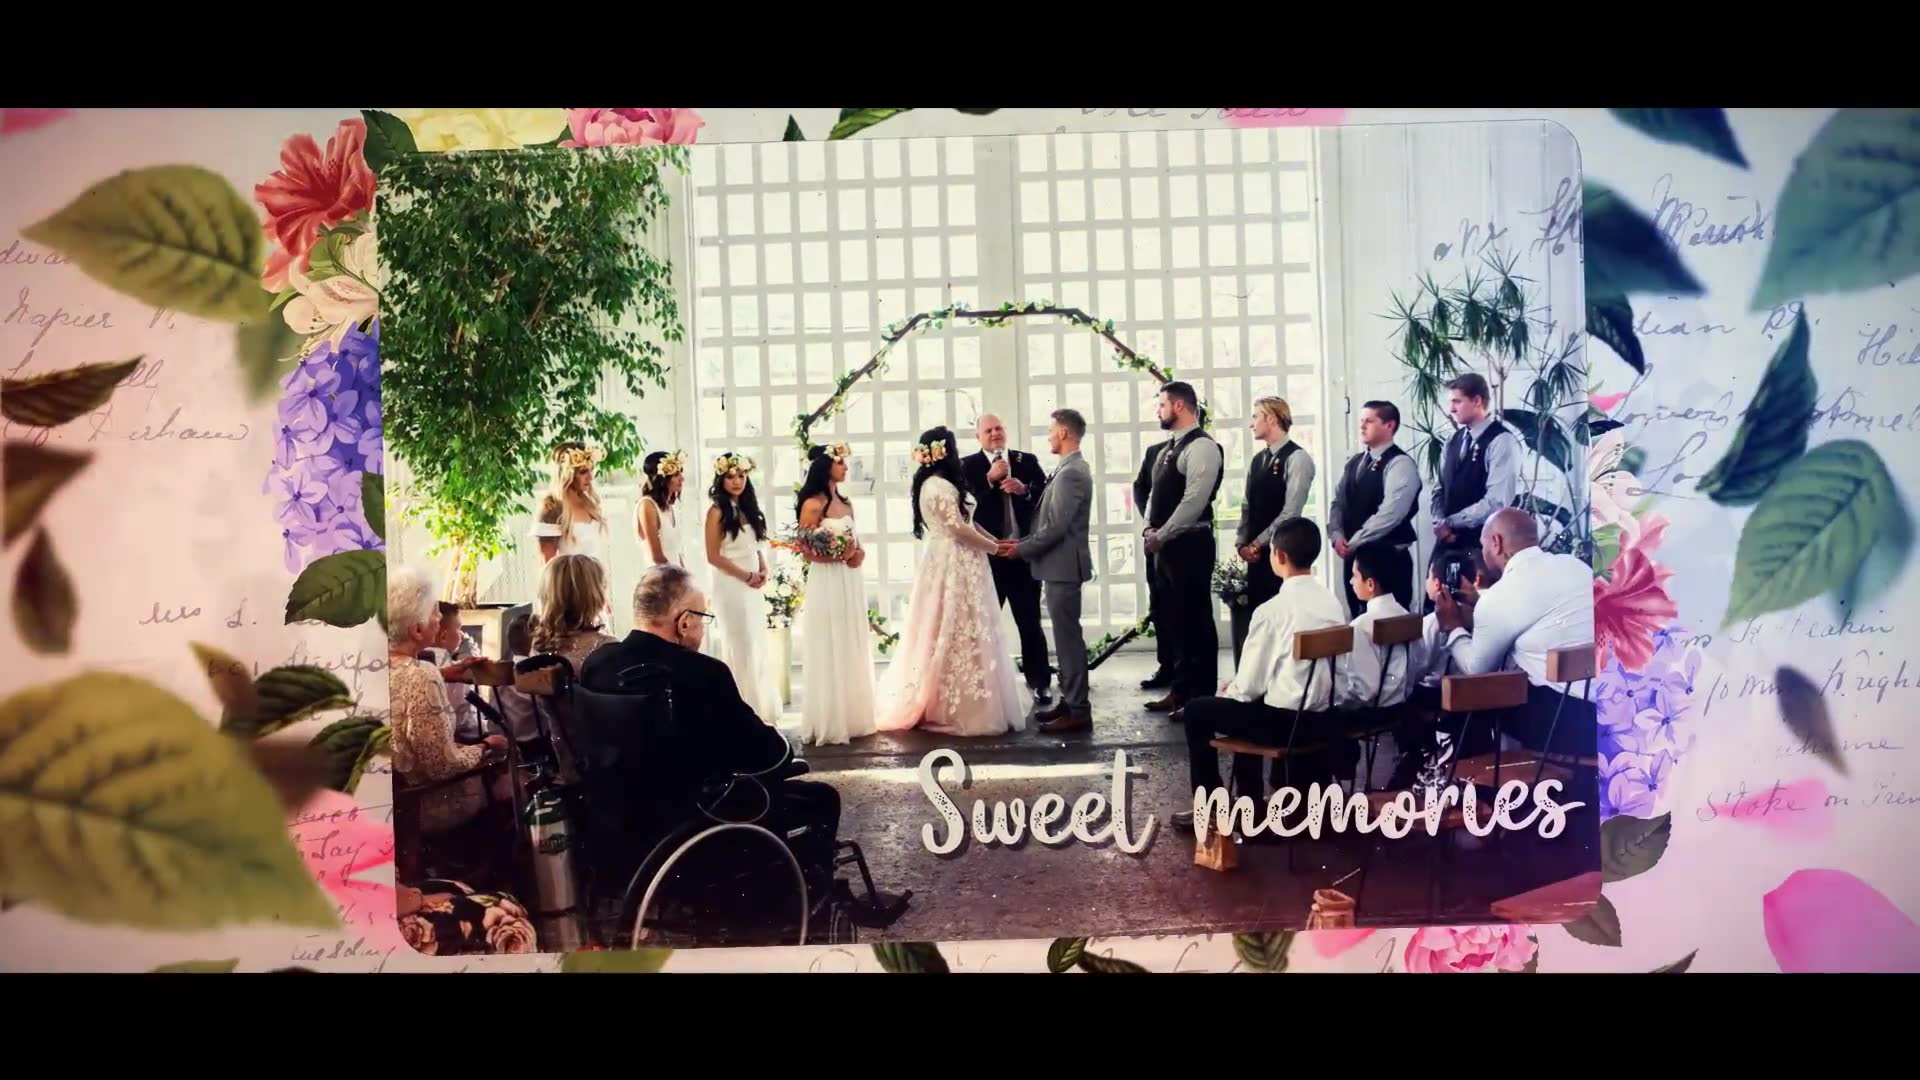 Wedding Slideshow v2 Videohive 23989006 After Effects Image 3